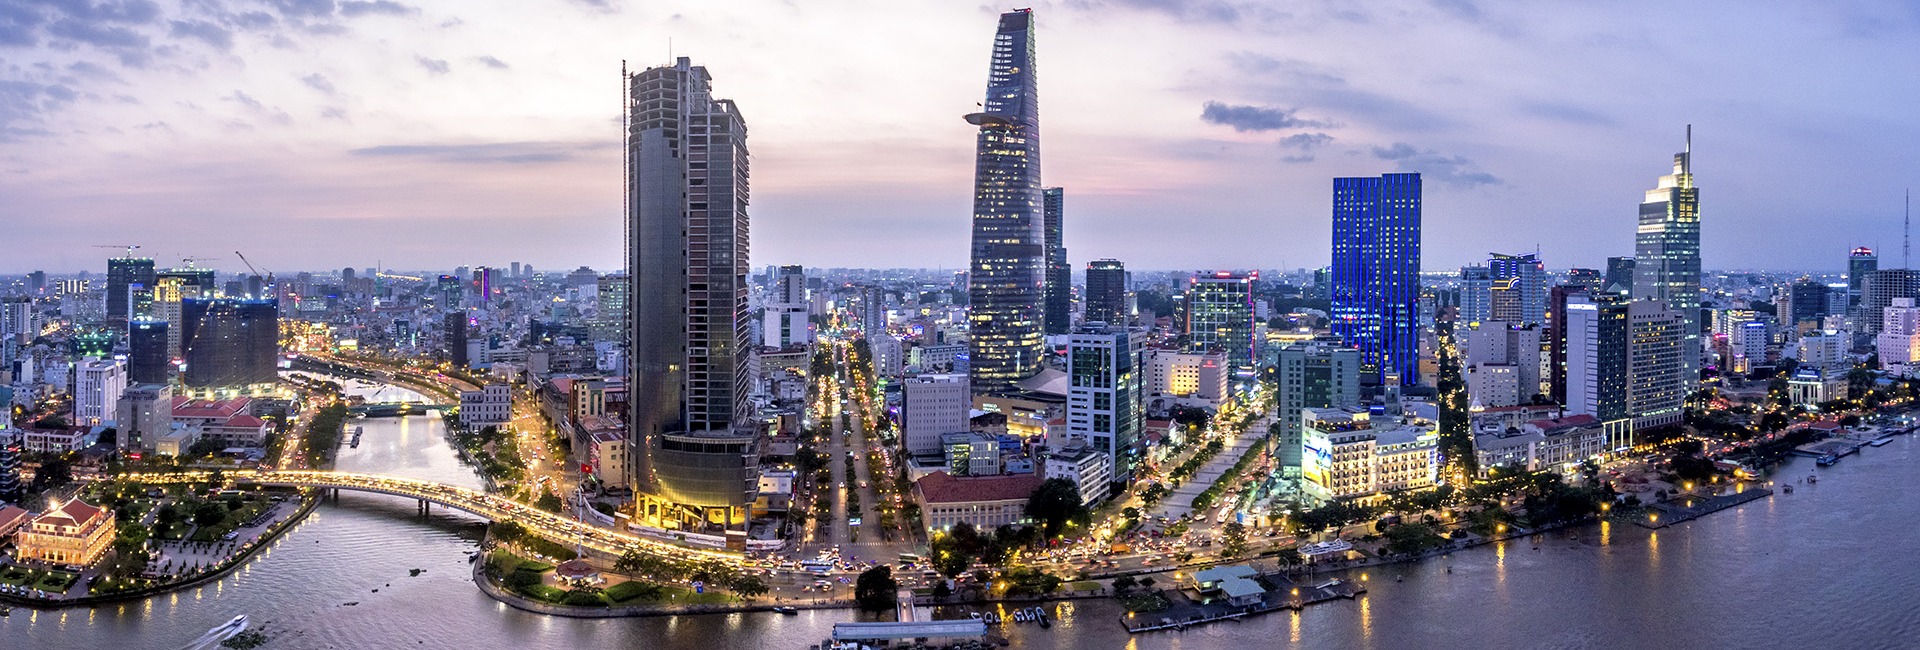 The near future of Vietnam’s cities